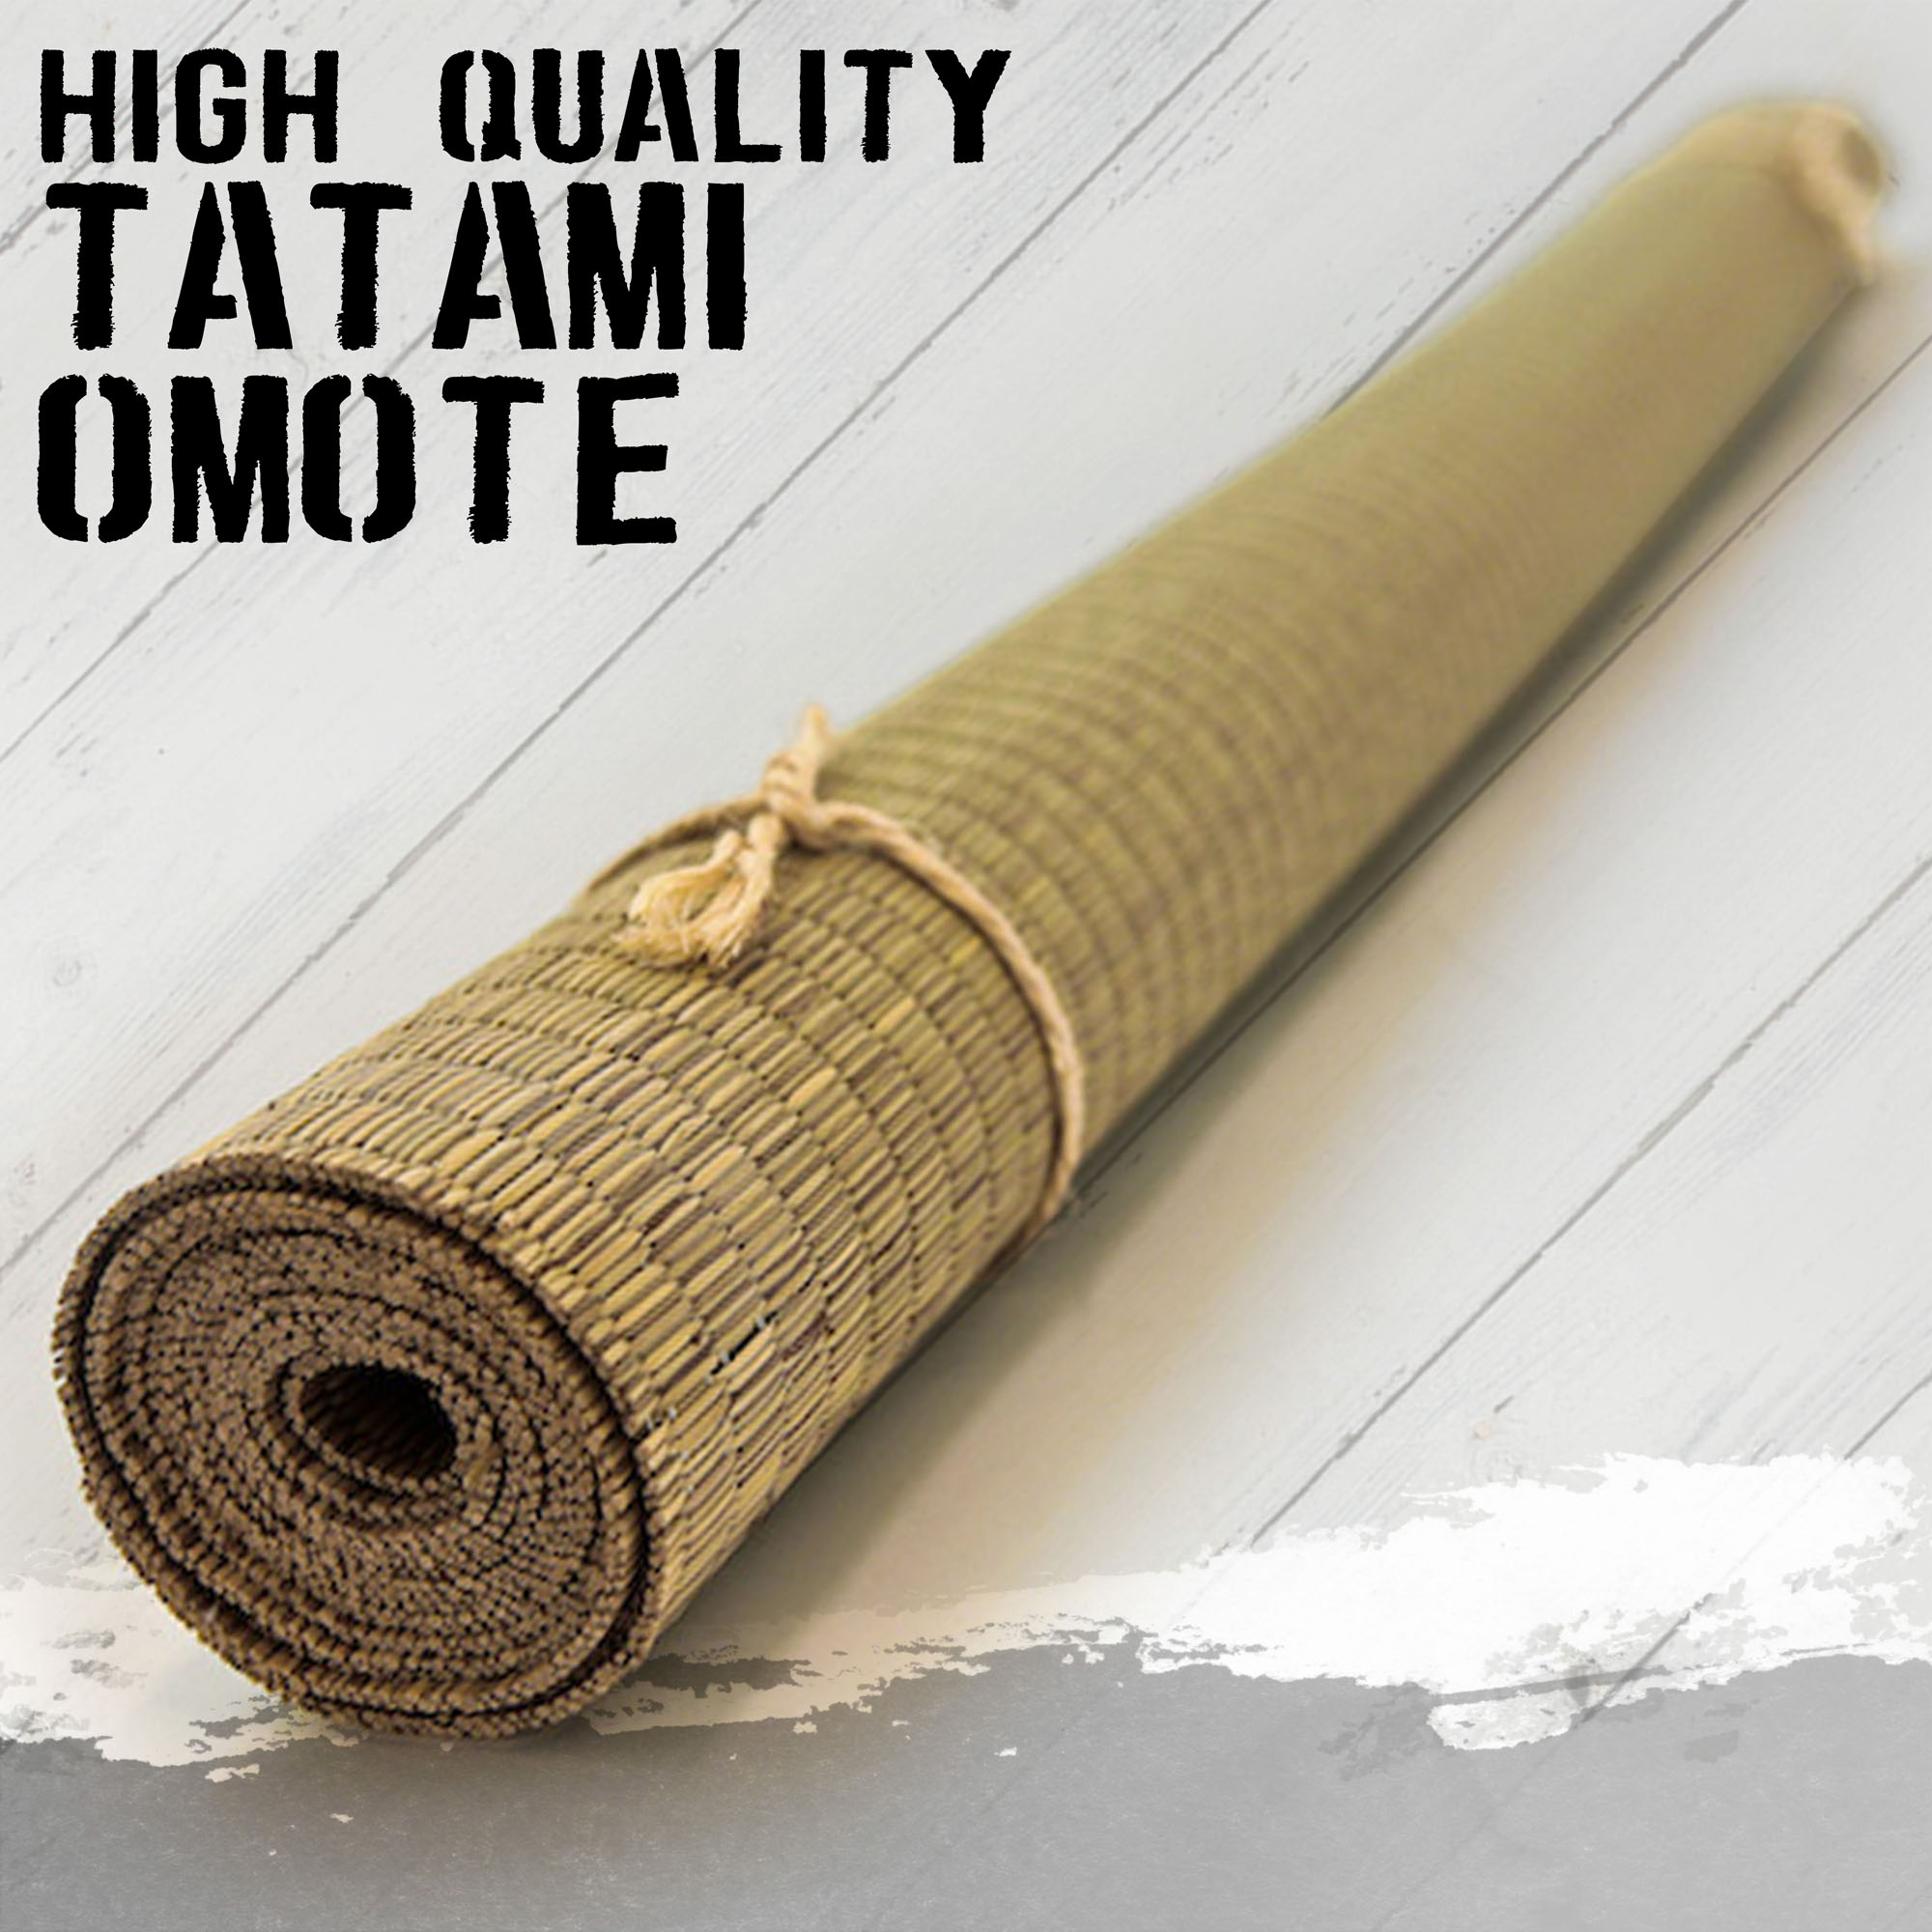 Tatami Omote - high quality - 10 pieces